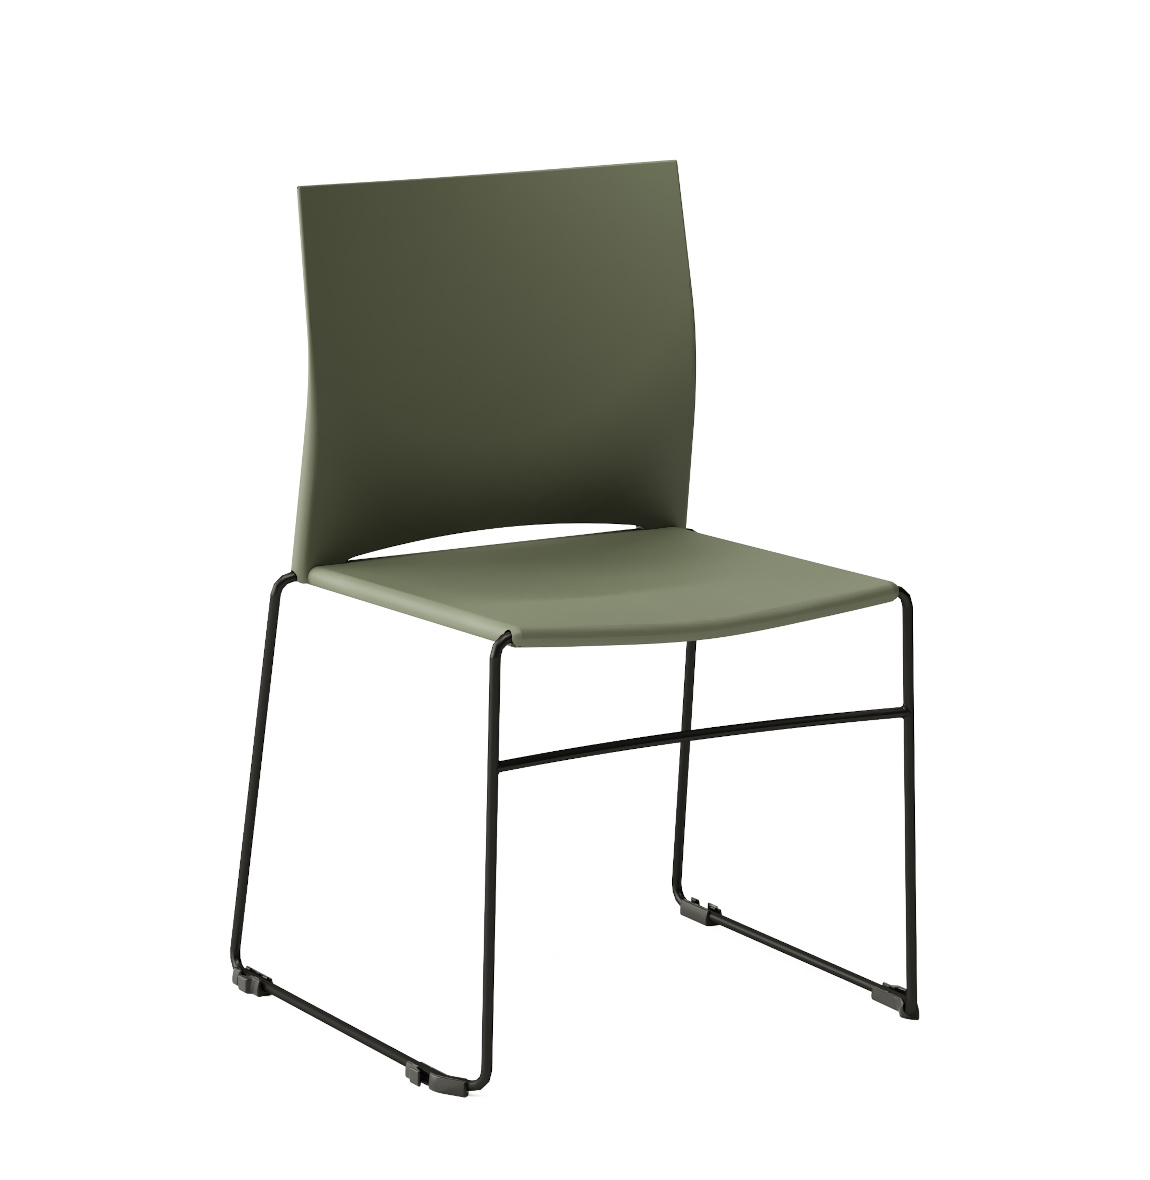 Ariz 550V Stuhl, Kufengestell, Sitz und Rückenlehne aus Kunststoff